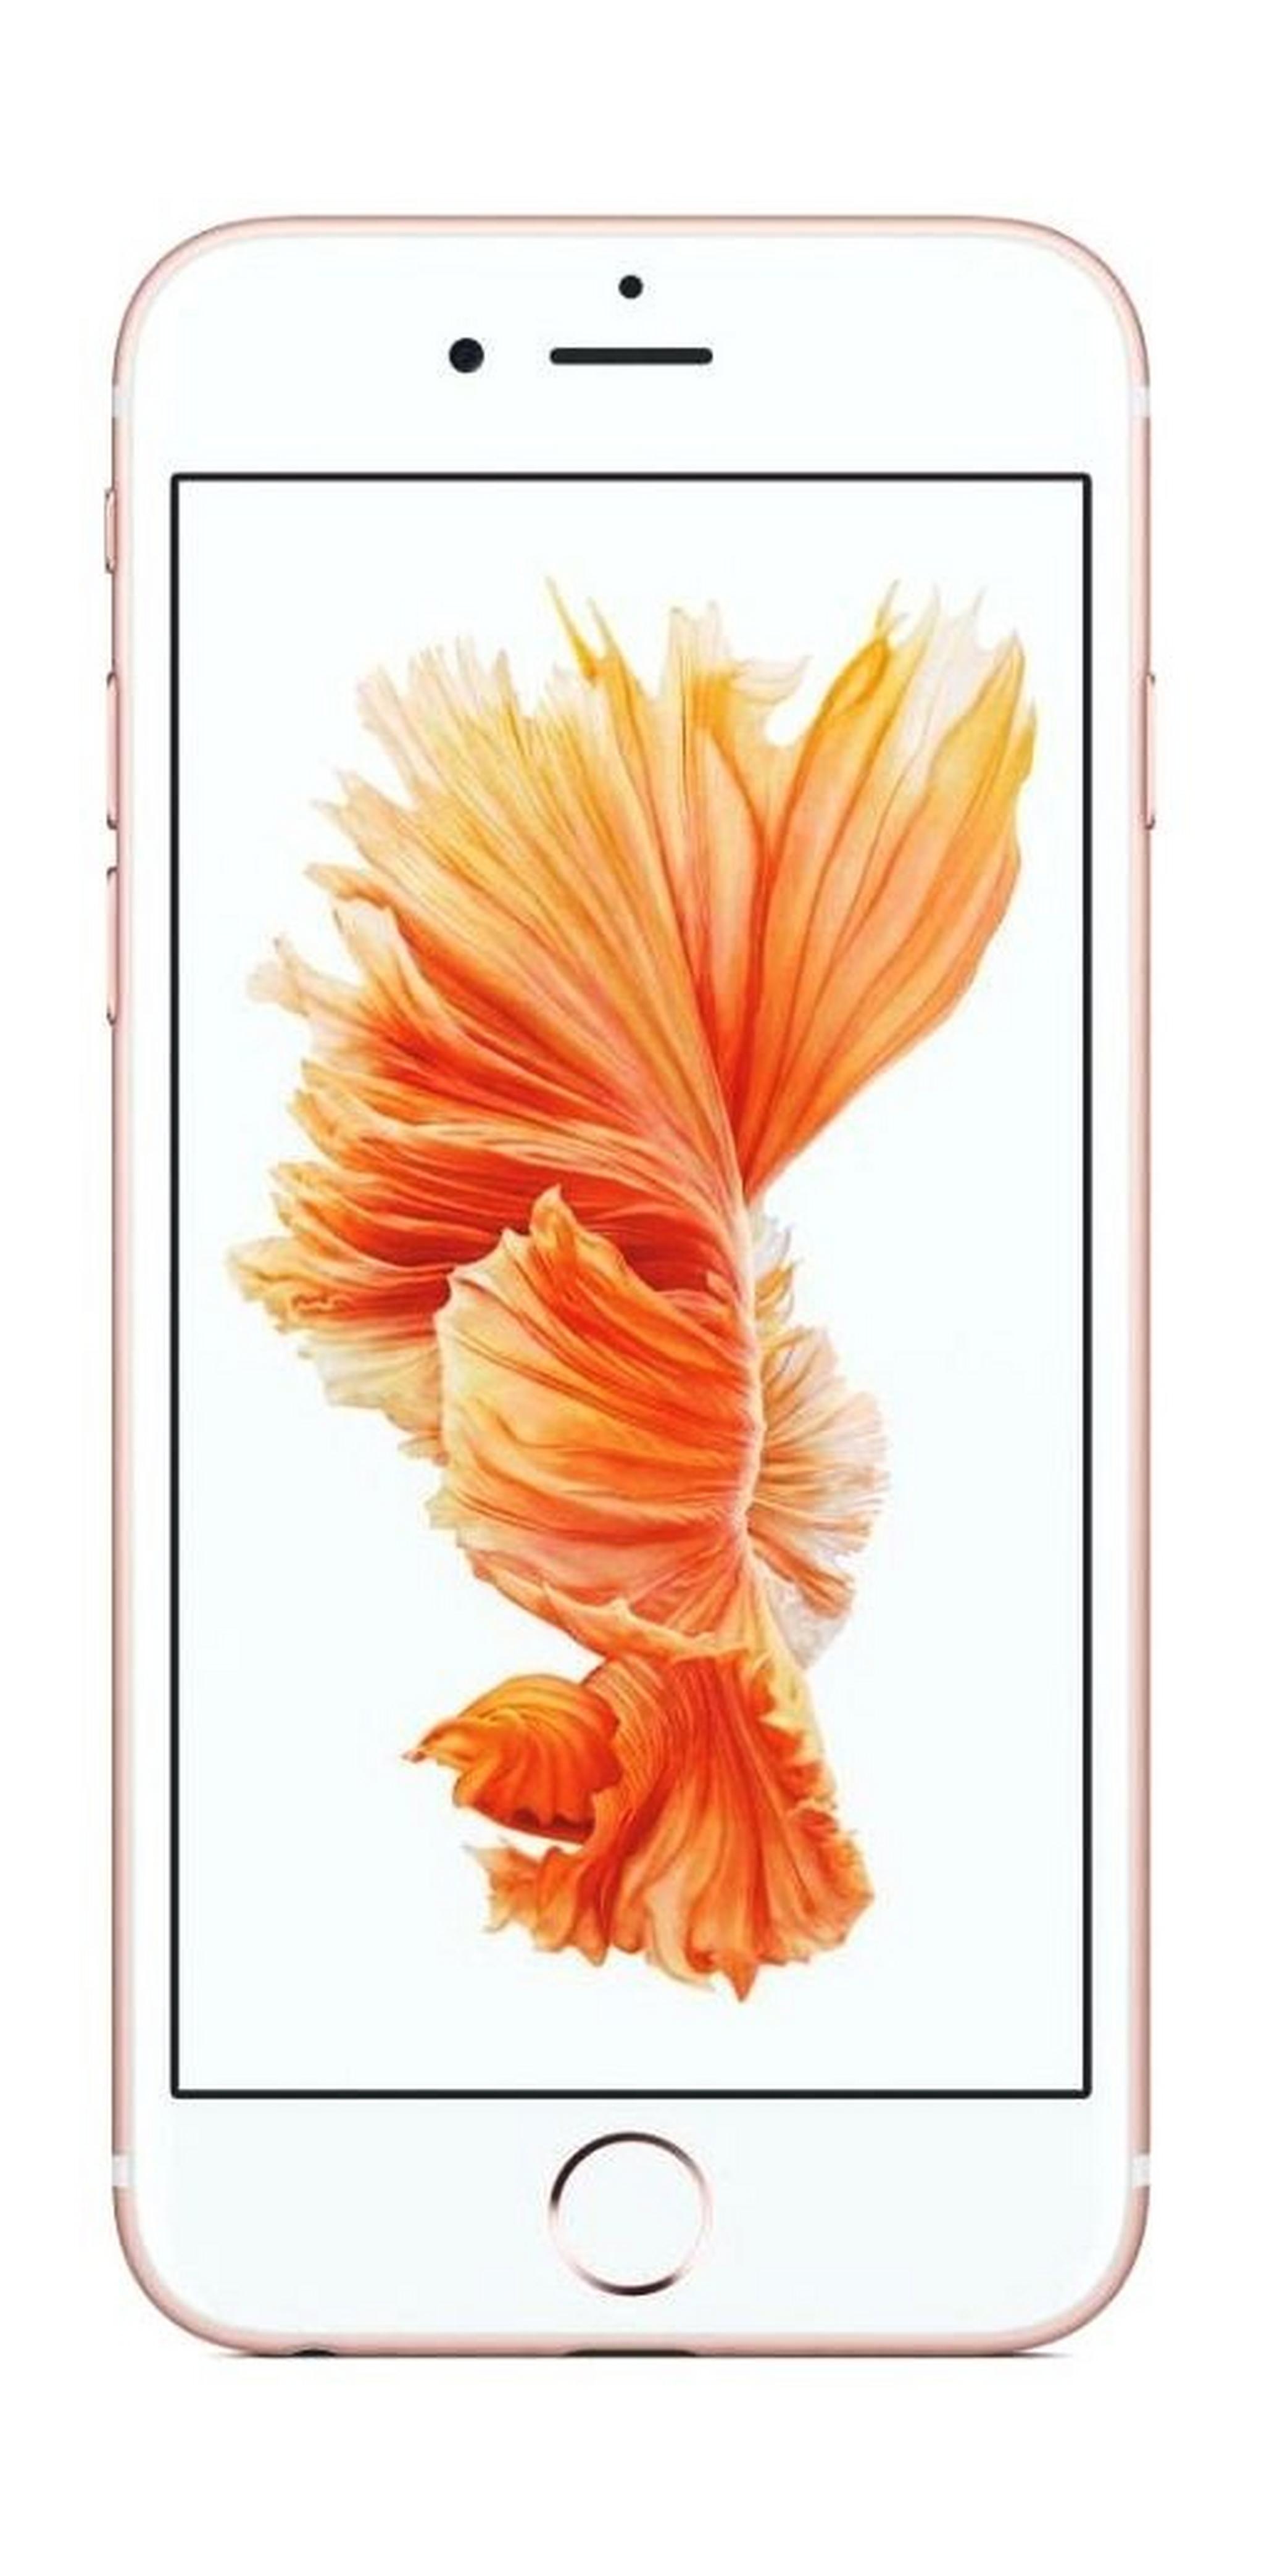 Apple iPhone 6S Plus 16GB 12MP 4G LTE 5.5-inch Smartphone - Rose Gold